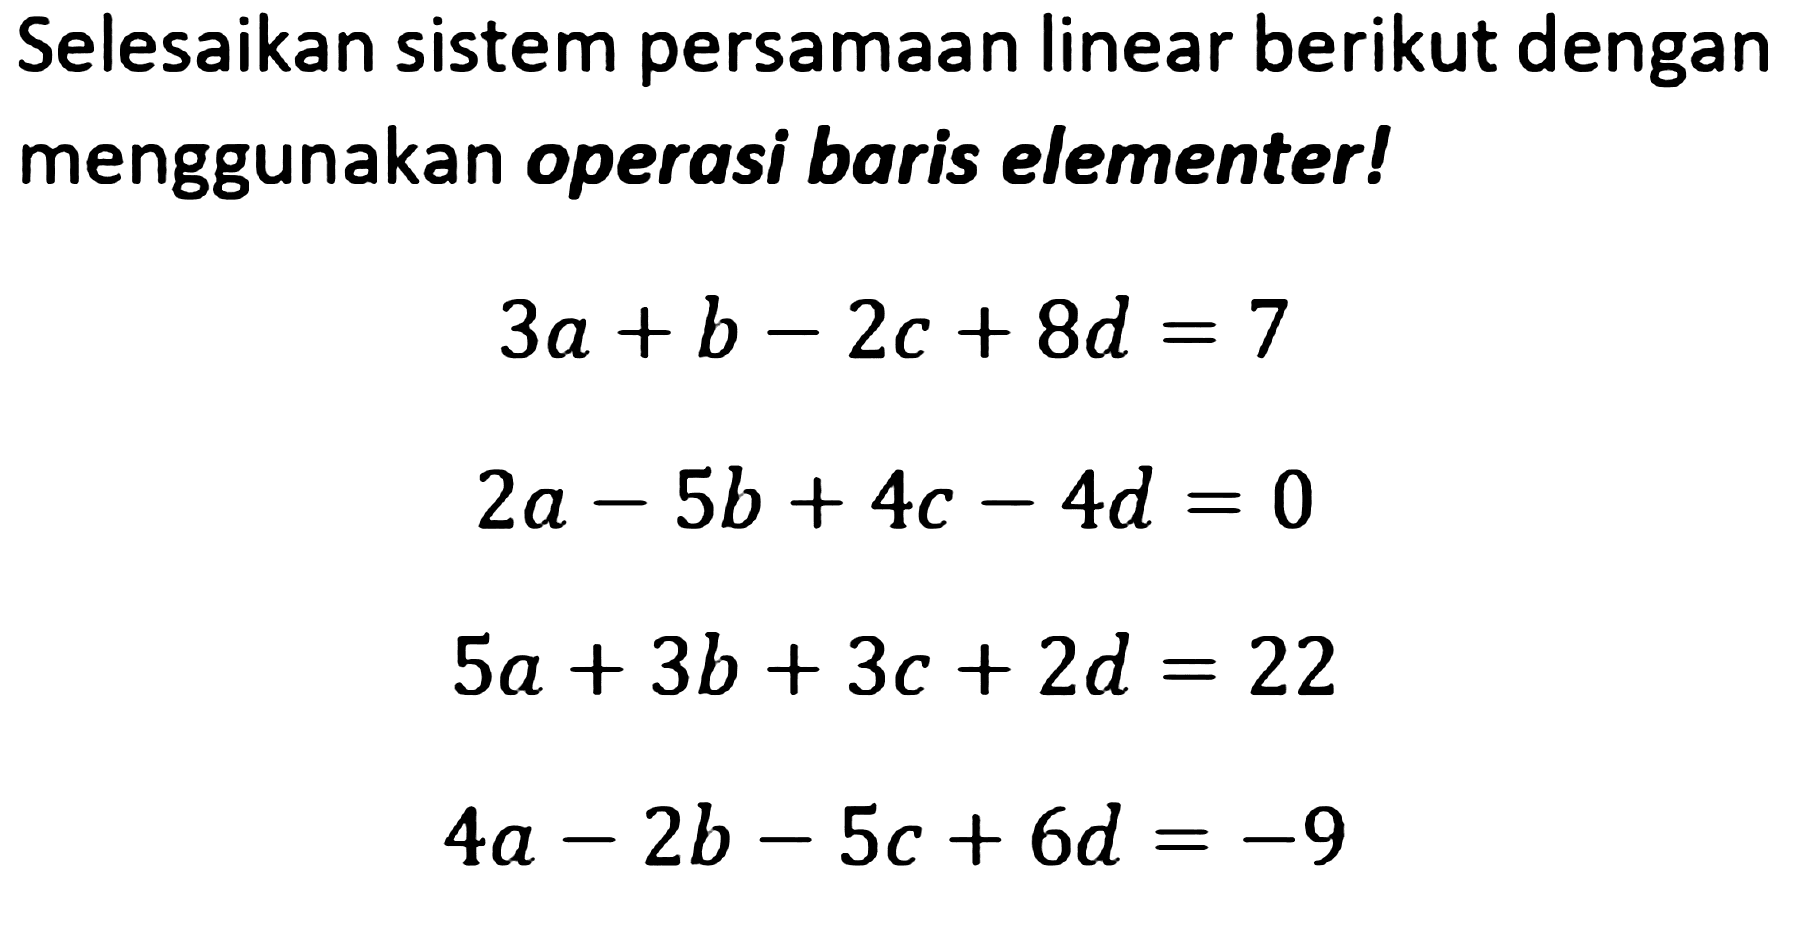 Selesaikan sistem persamaan linear berikut dengan menggunakan operasi baris elementer! 3a+b-2c+8d=7 2a-5b+4c-4d=0 5a+3b+3c+2d=22 4a-2b-5c+6d=-9